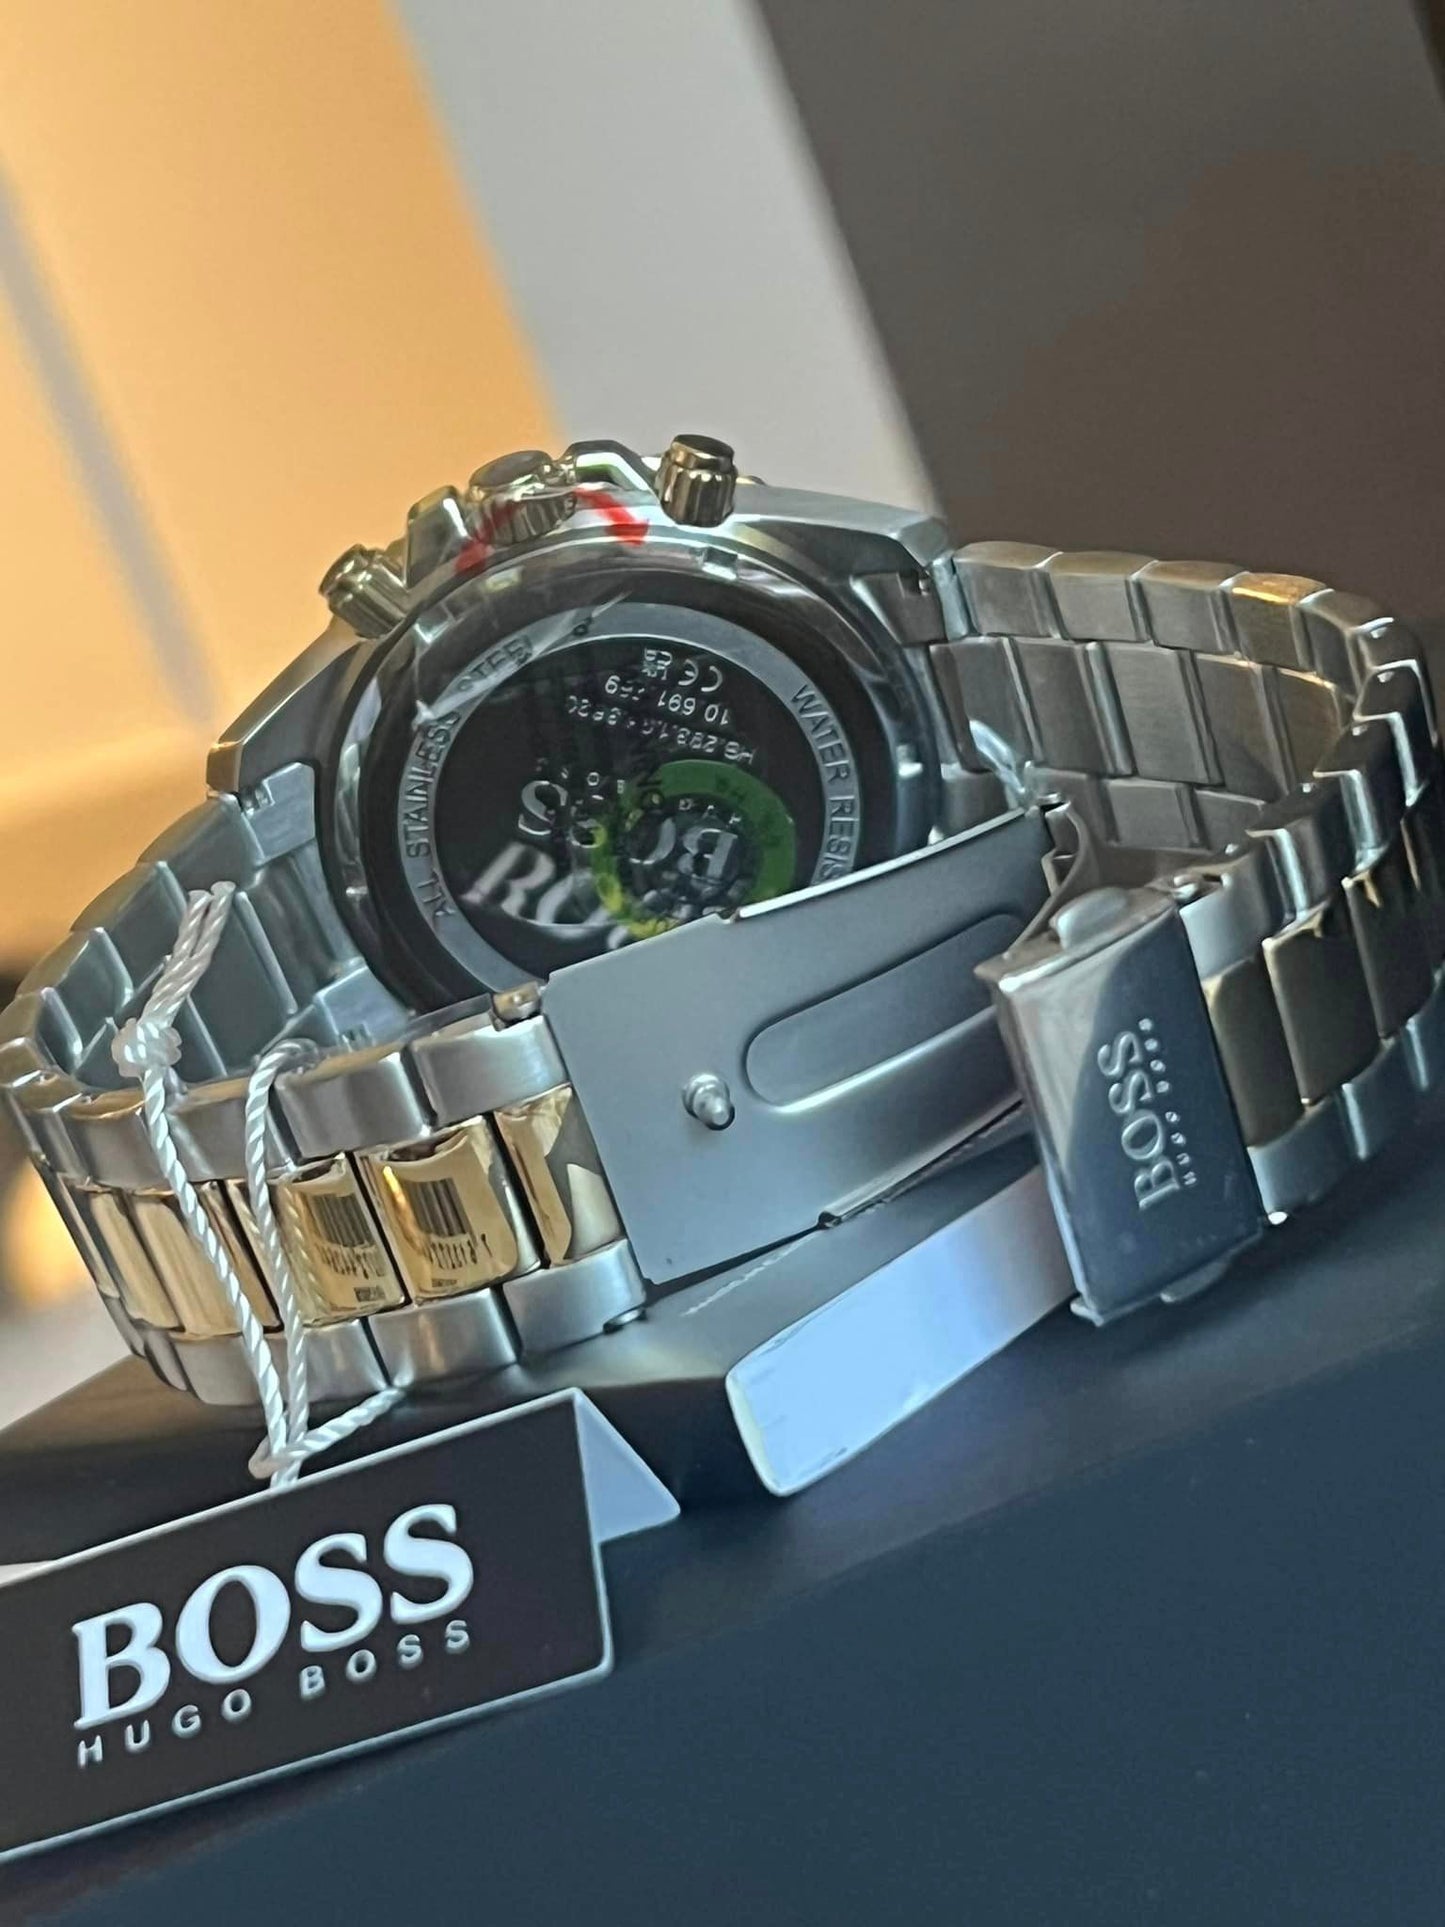 Hugo Boss Men’s Admiral Watch